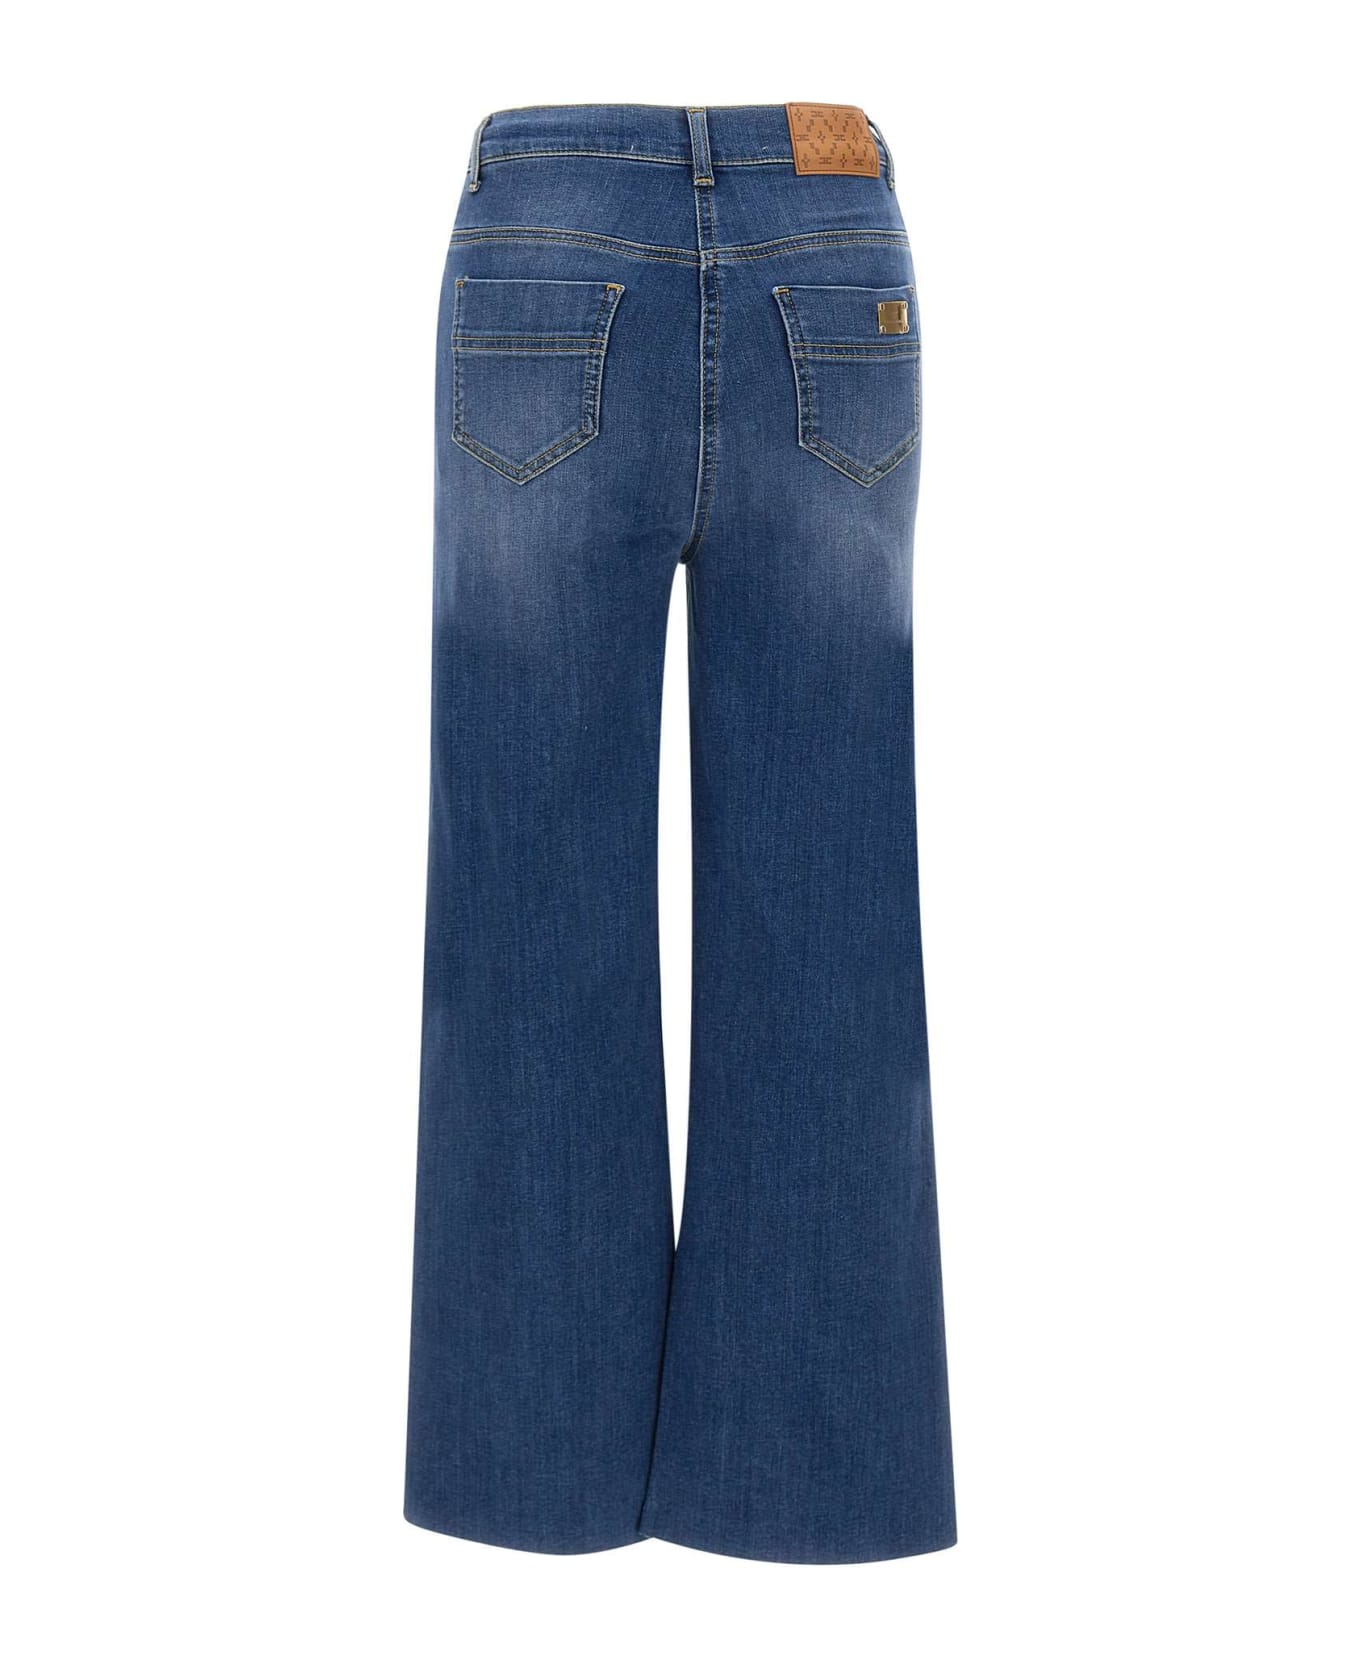 Elisabetta Franchi 'urban' Jeans - Blue Denim